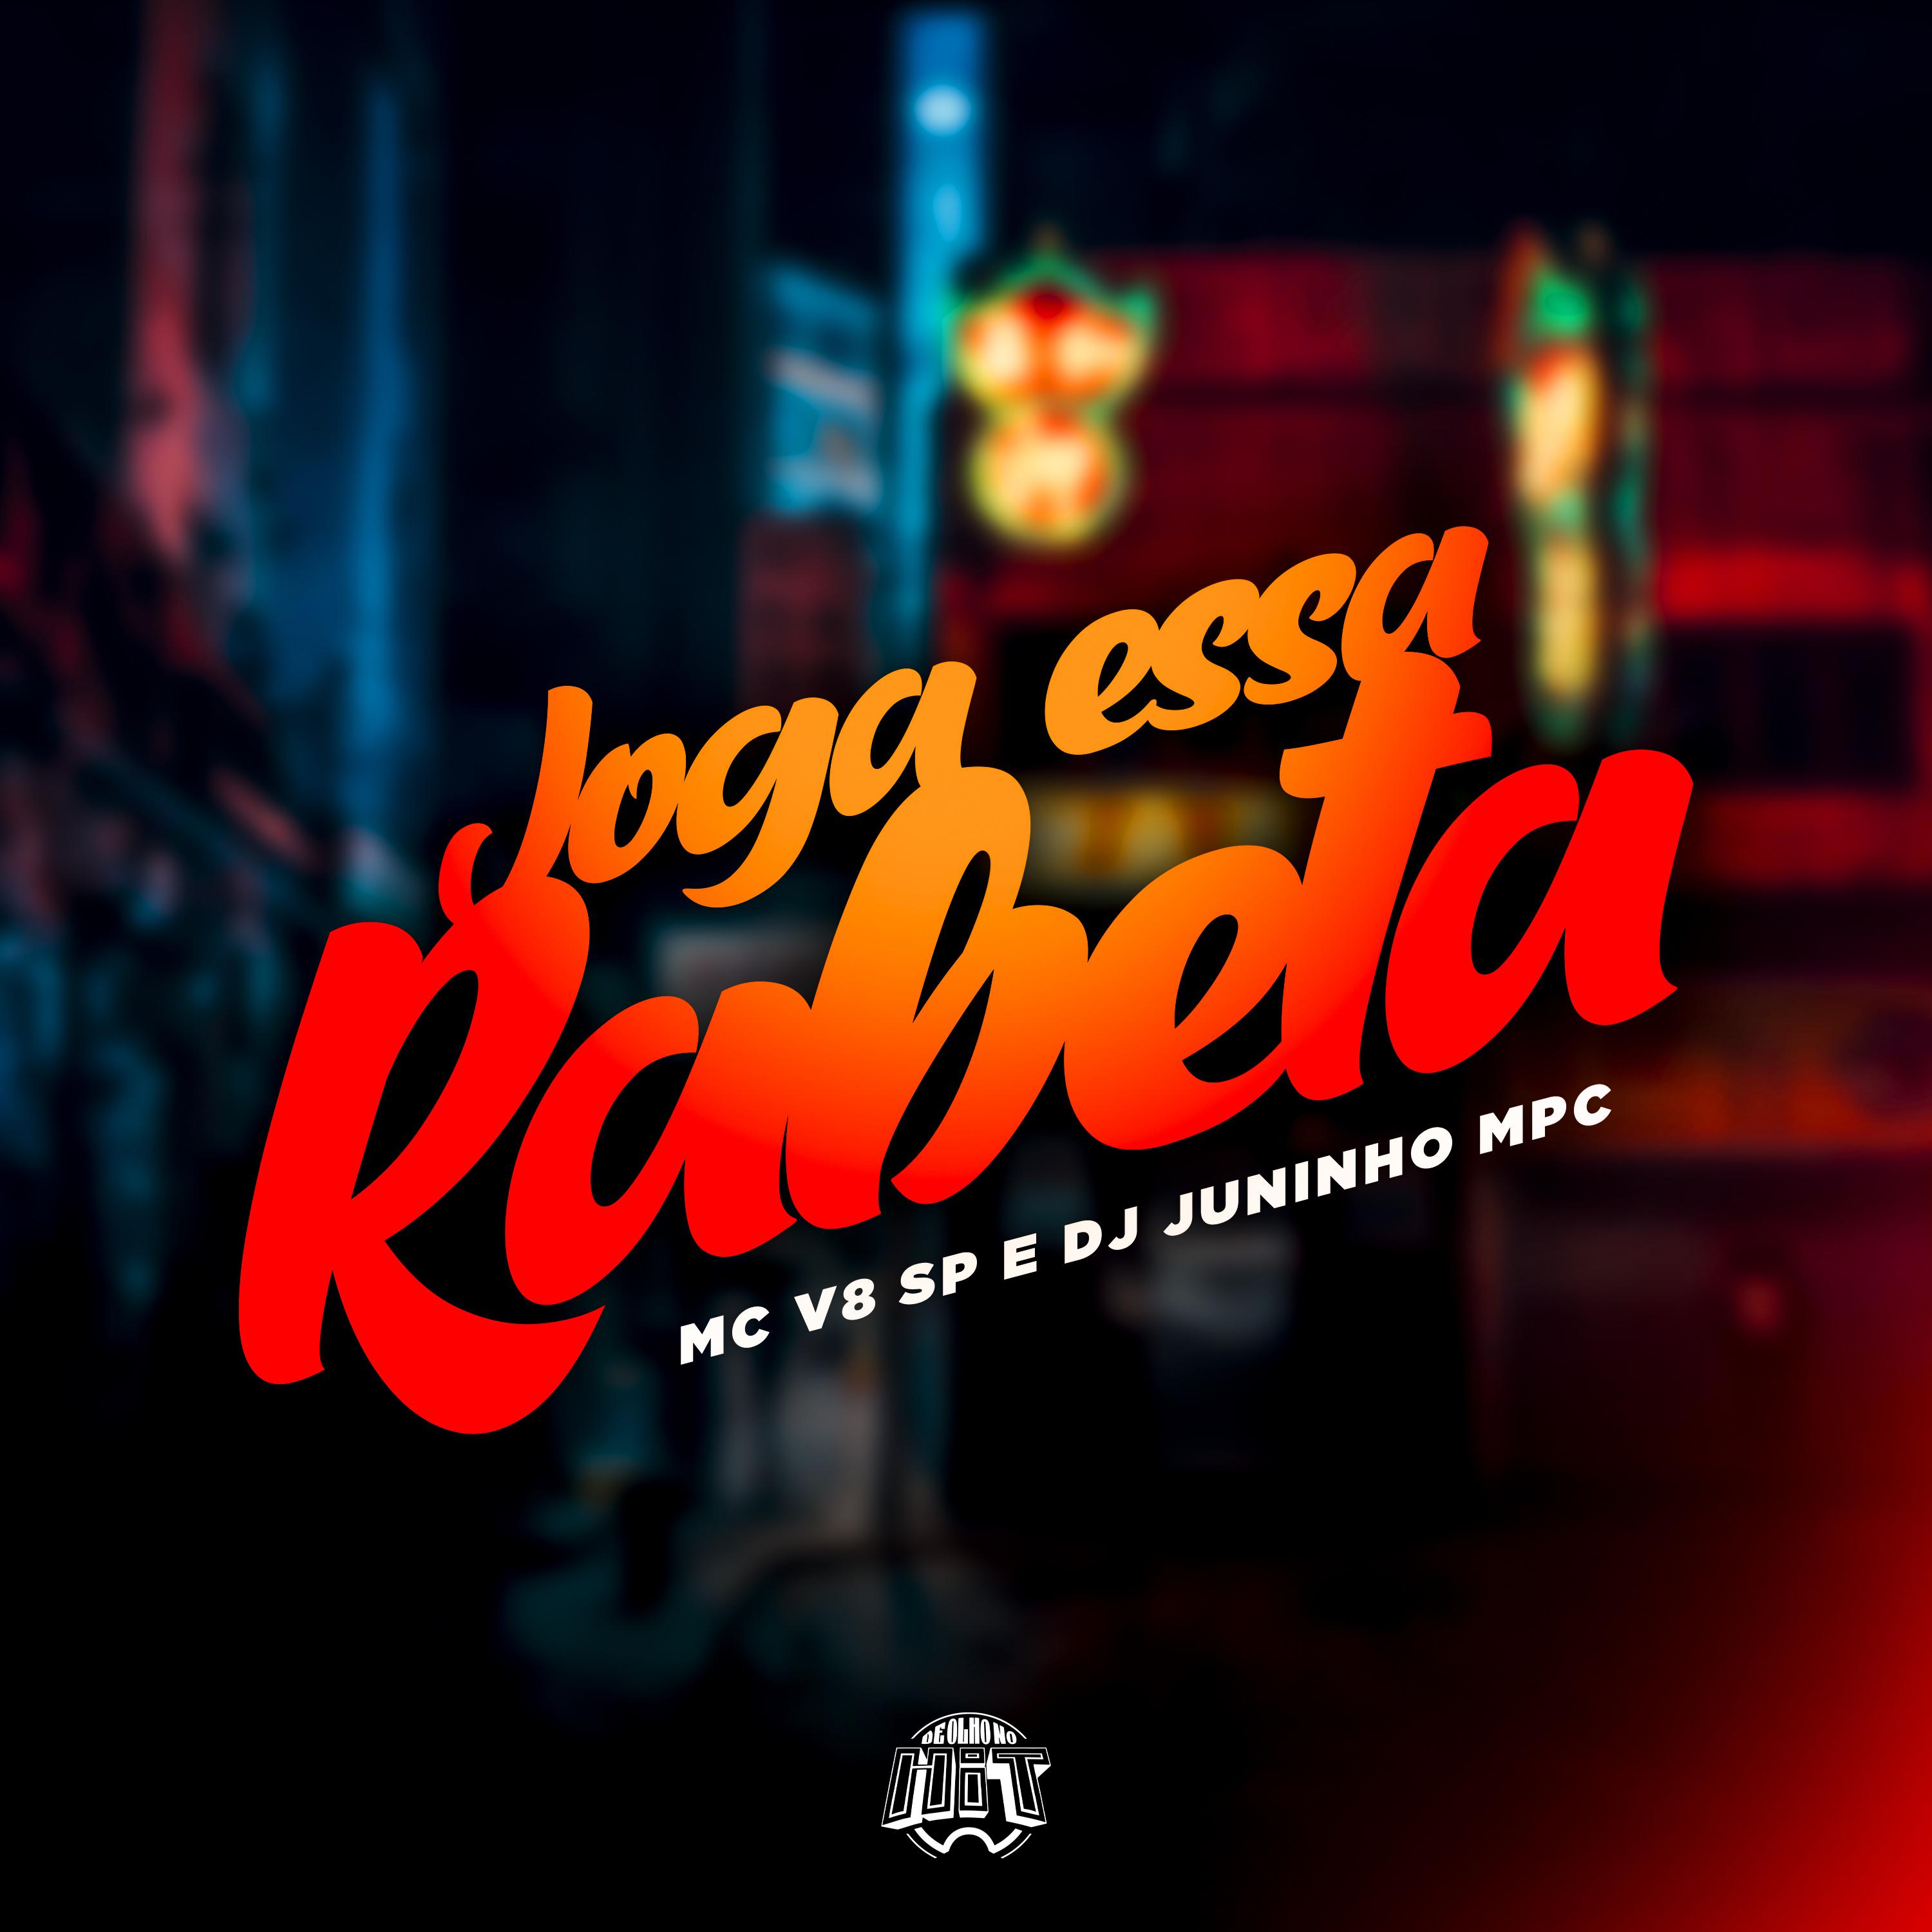 Постер альбома Joga Essa Rabeta